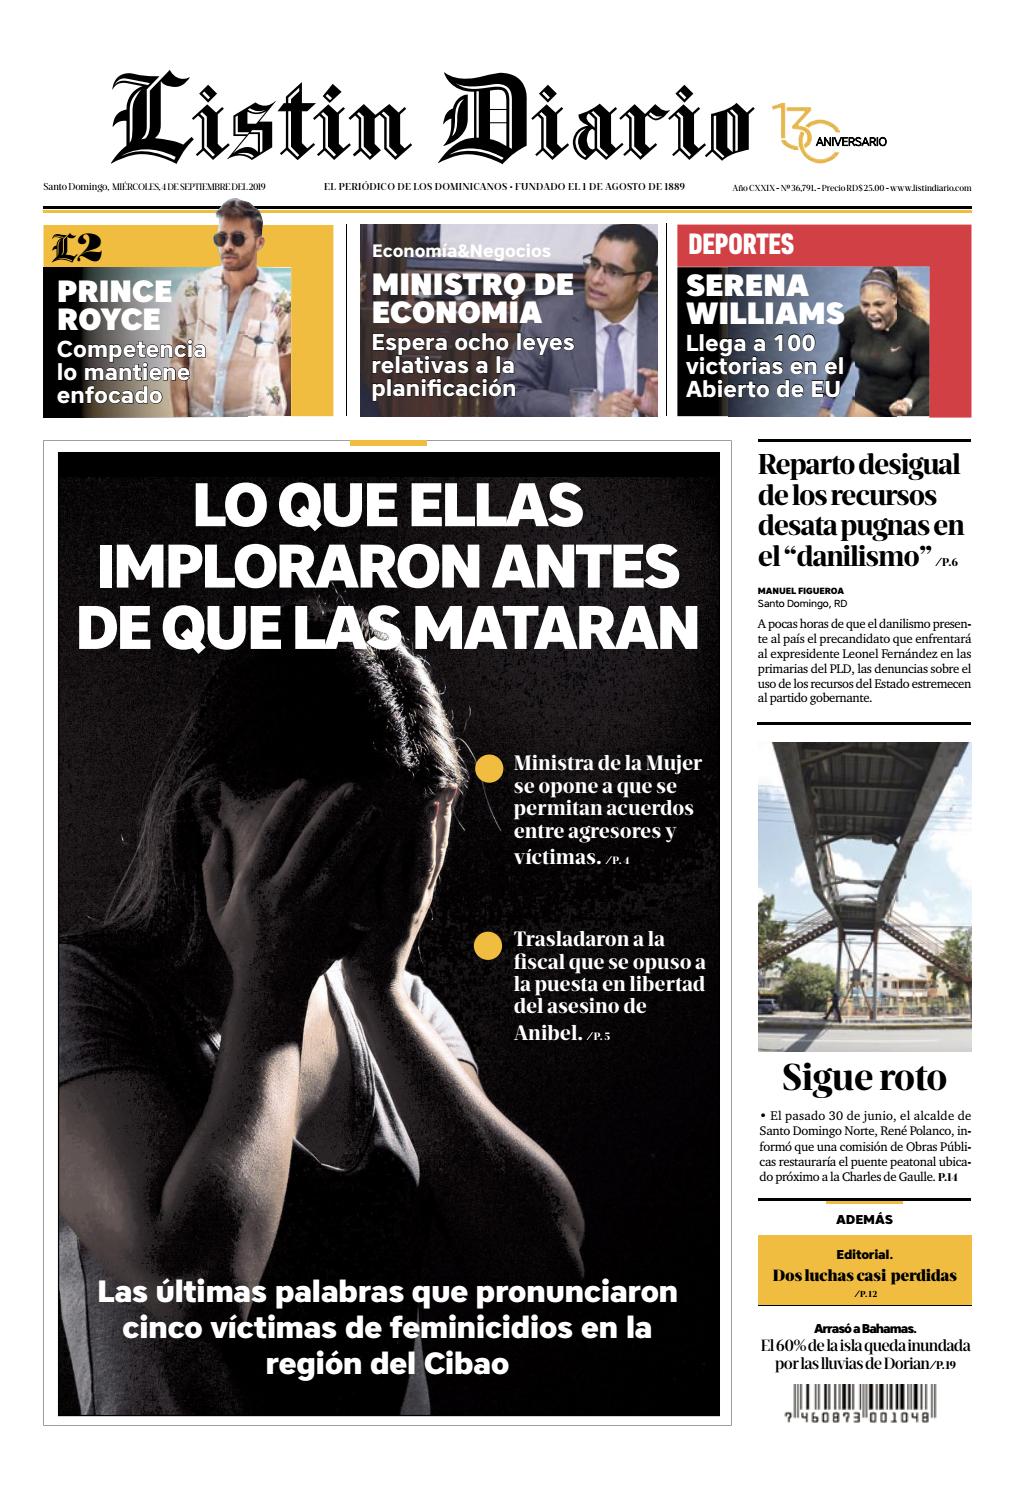 Portada Periódico Listín Diario, Miércoles 04 de Septiembre, 2019